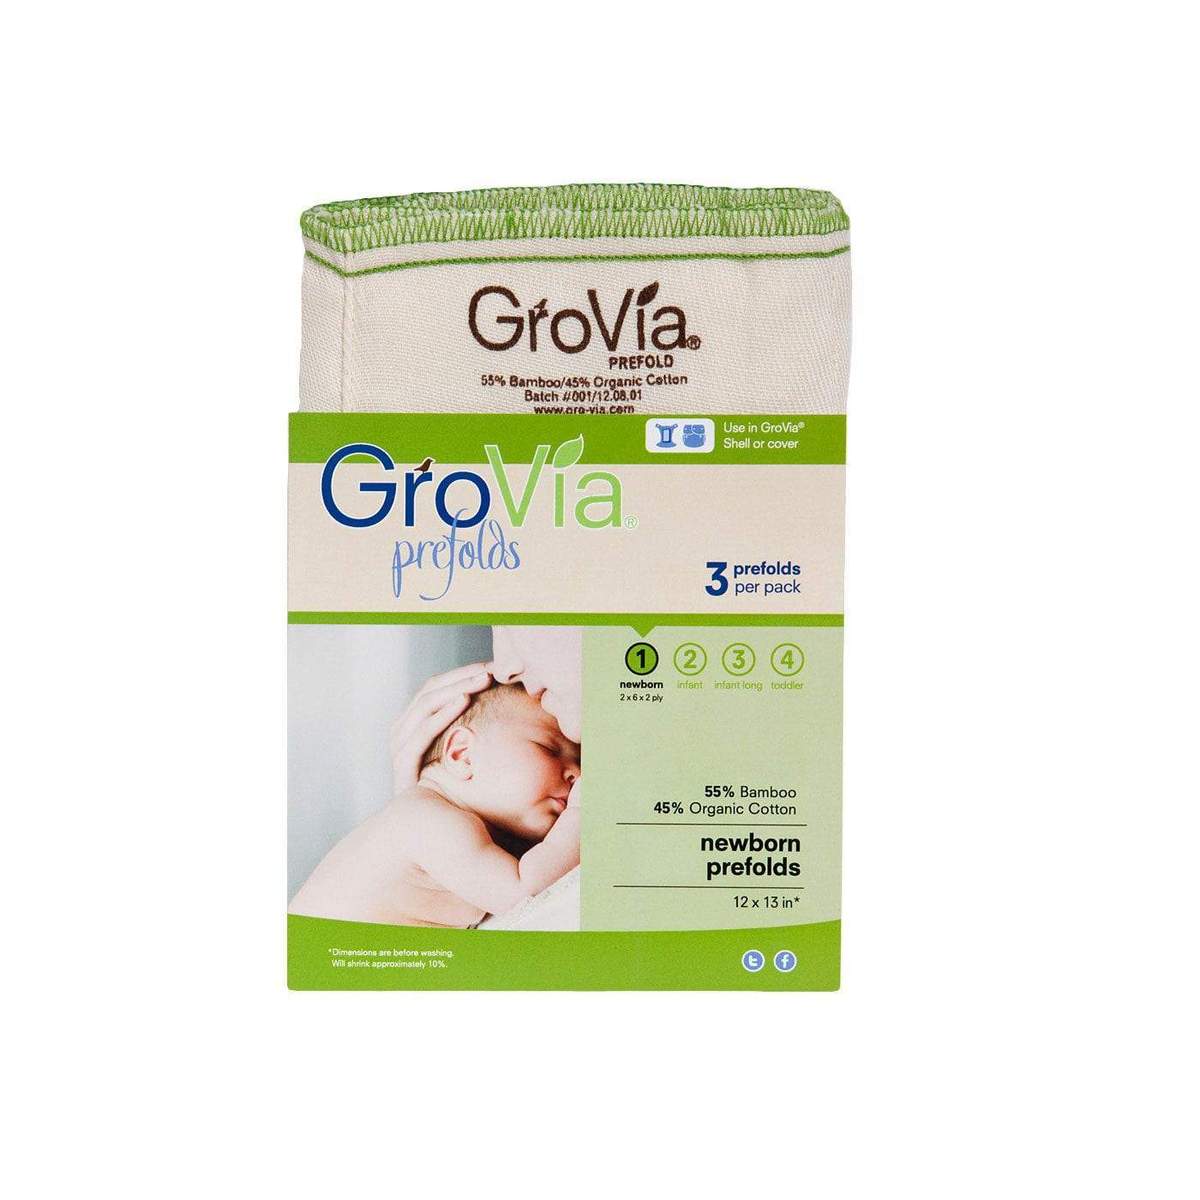 GroVia - Bamboo Prefold Cloth Diapers in a pack of 3 newborn